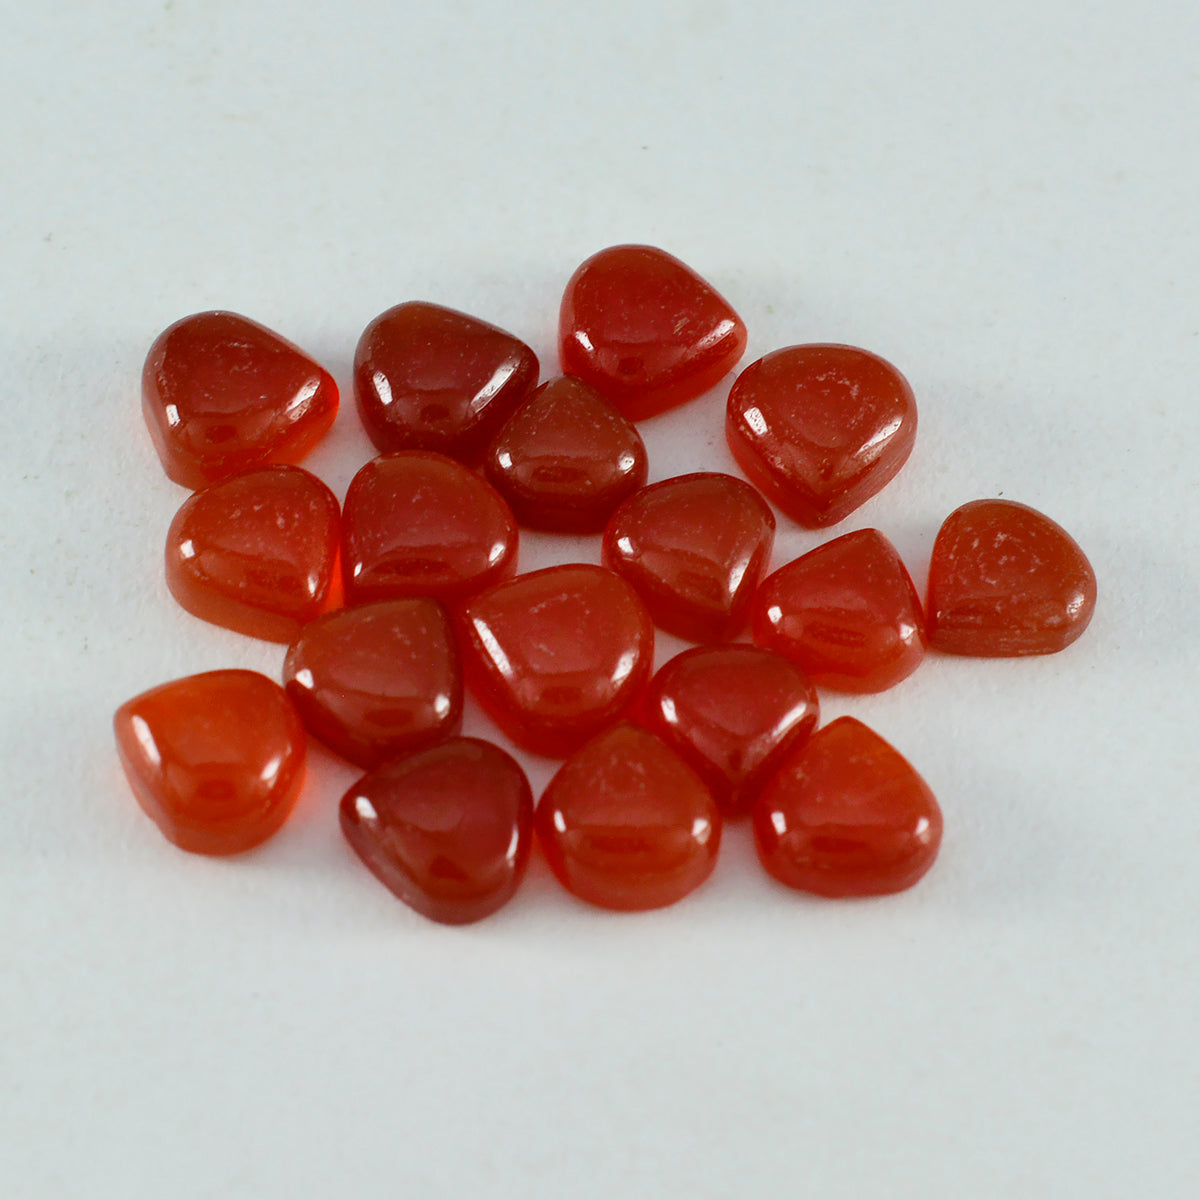 Riyogems 1PC Red Onyx Cabochon 6x6 mm Heart Shape attractive Quality Gem